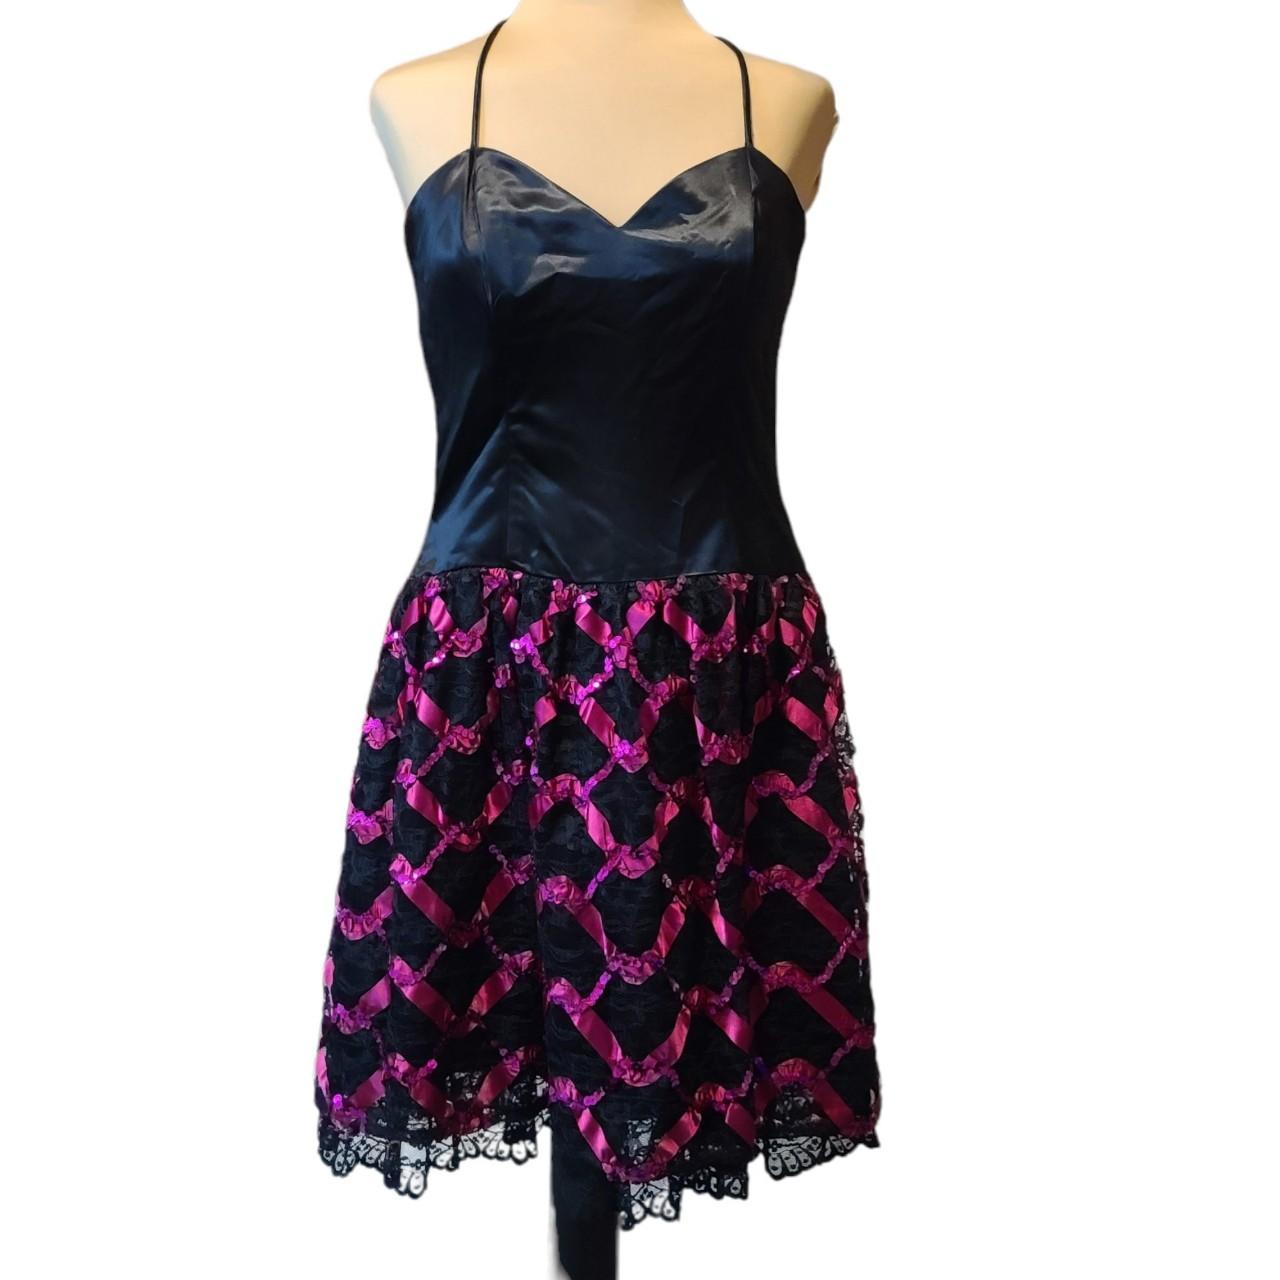 Gunne Sax Women's Black and Pink Dress